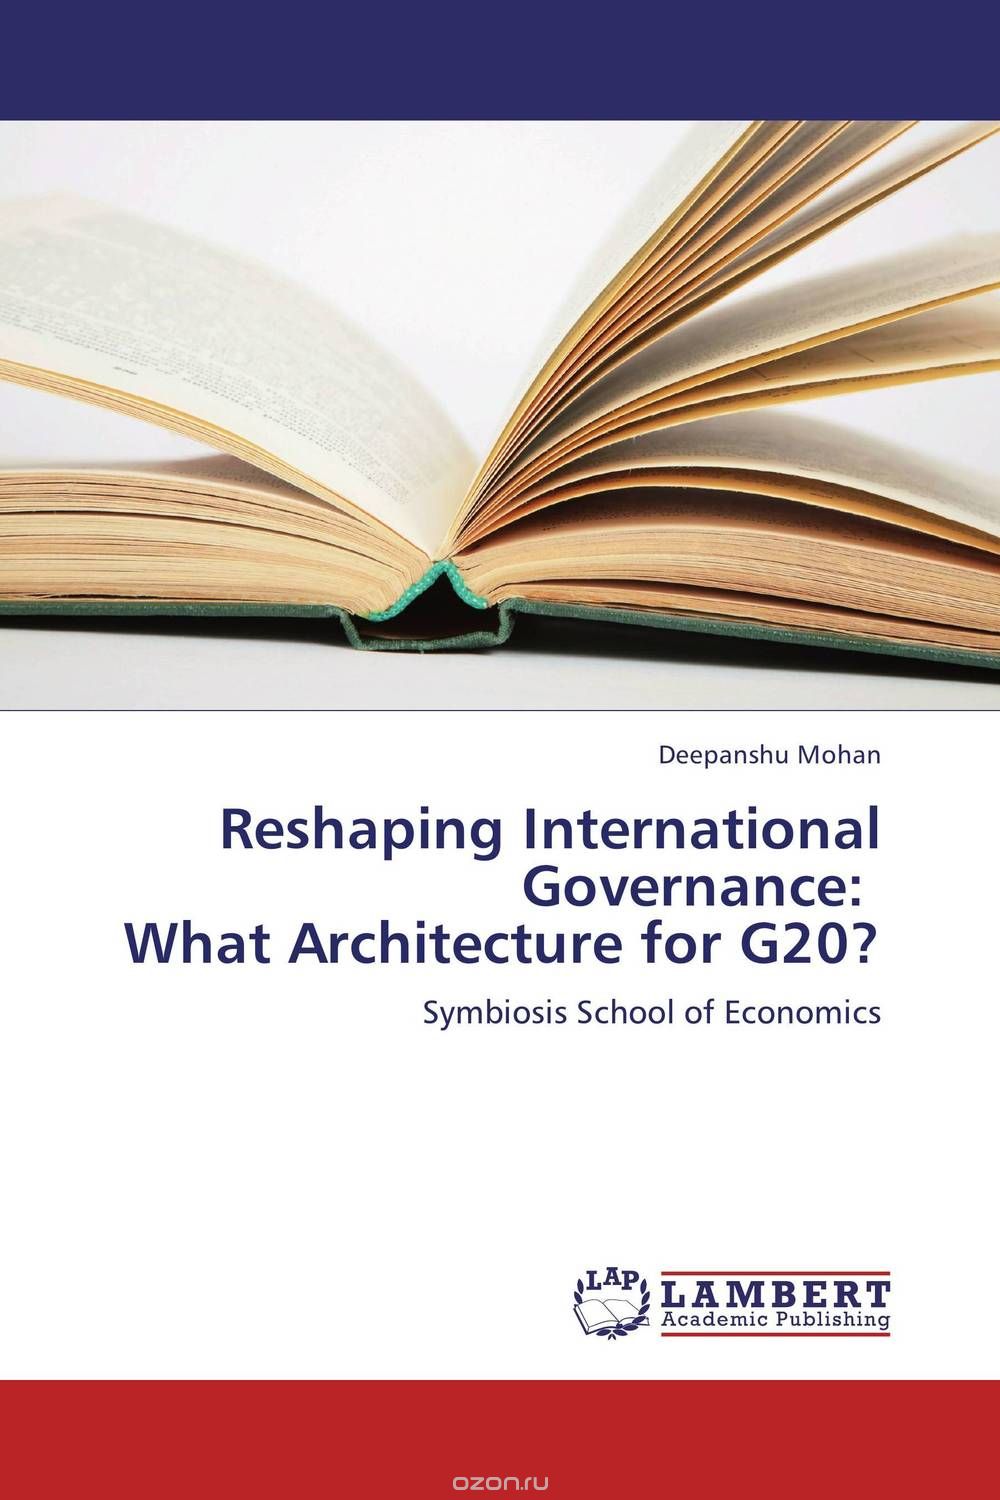 Скачать книгу "Reshaping International Governance:   What Architecture for G20?"